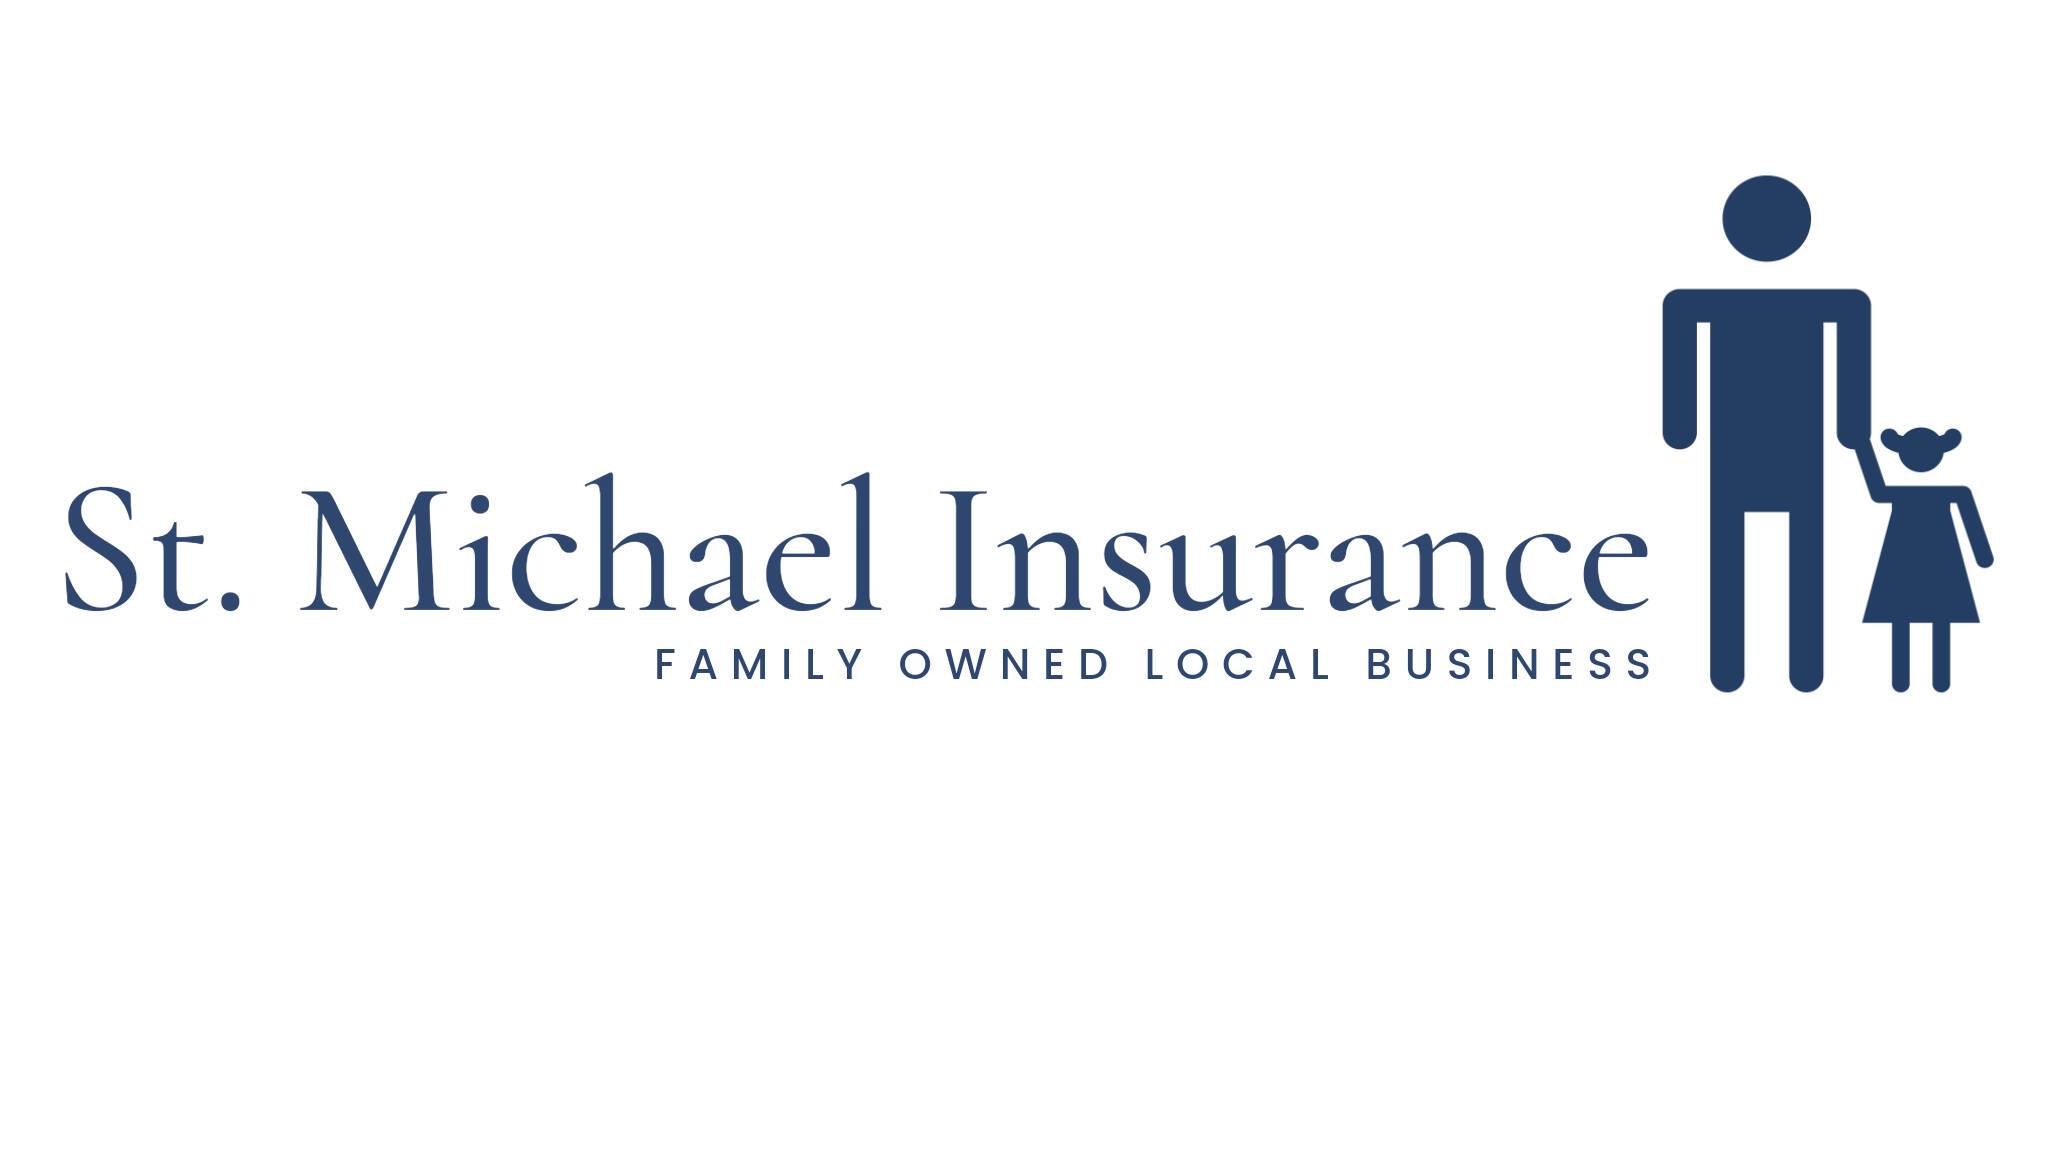 St. Michael Insurance